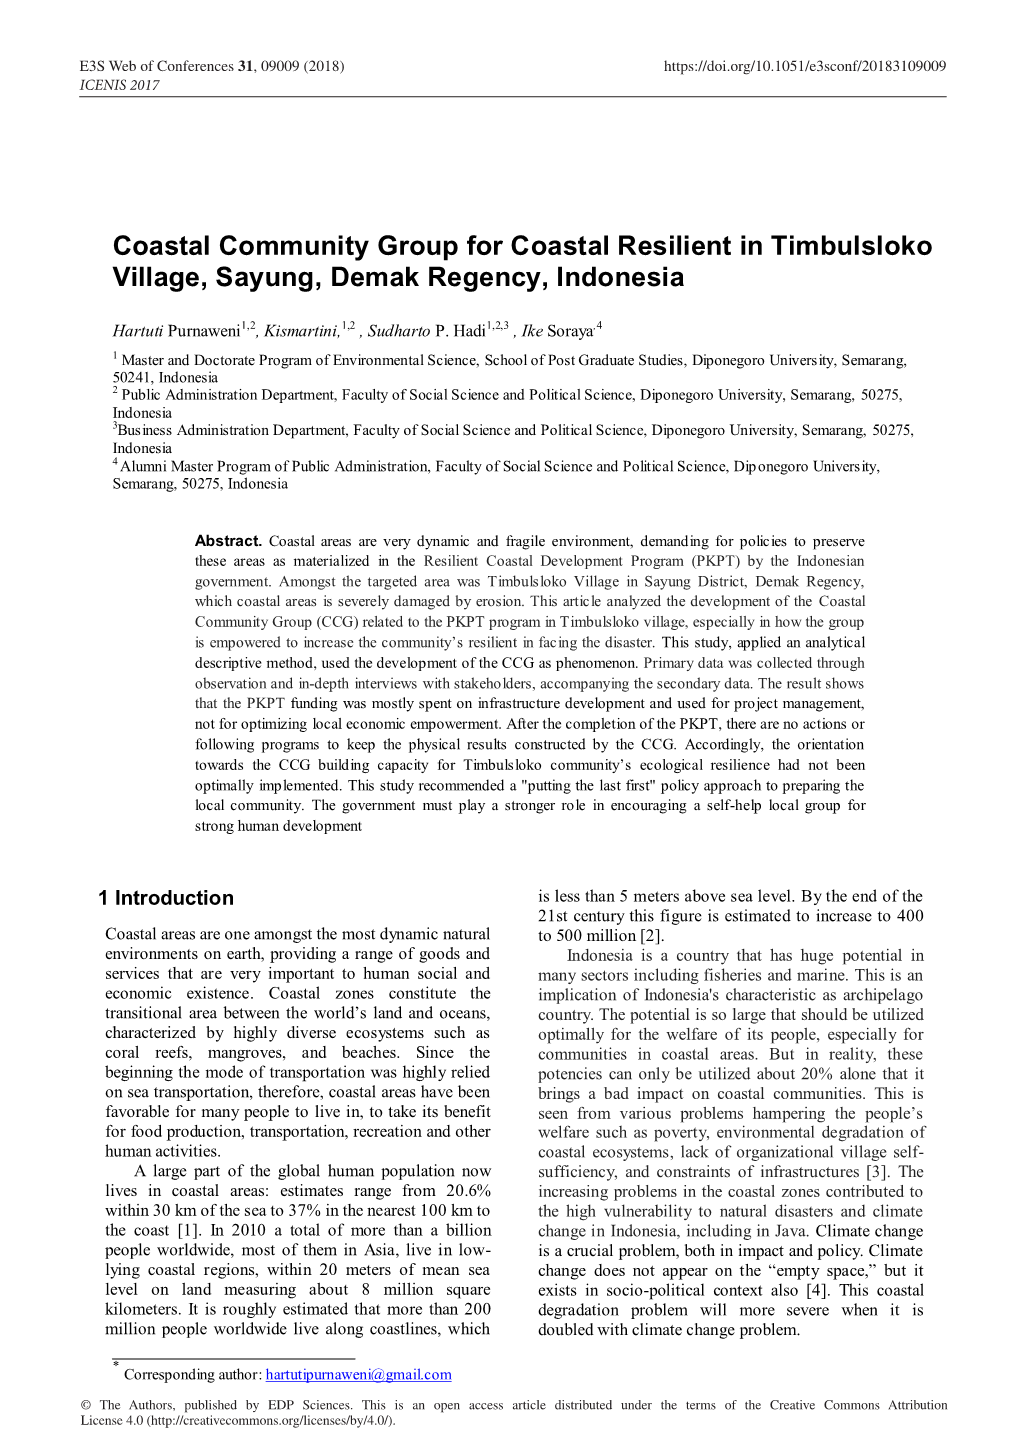 Coastal Community Group for Coastal Resilient in Timbulsloko Village, Sayung, Demak Regency, Indonesia